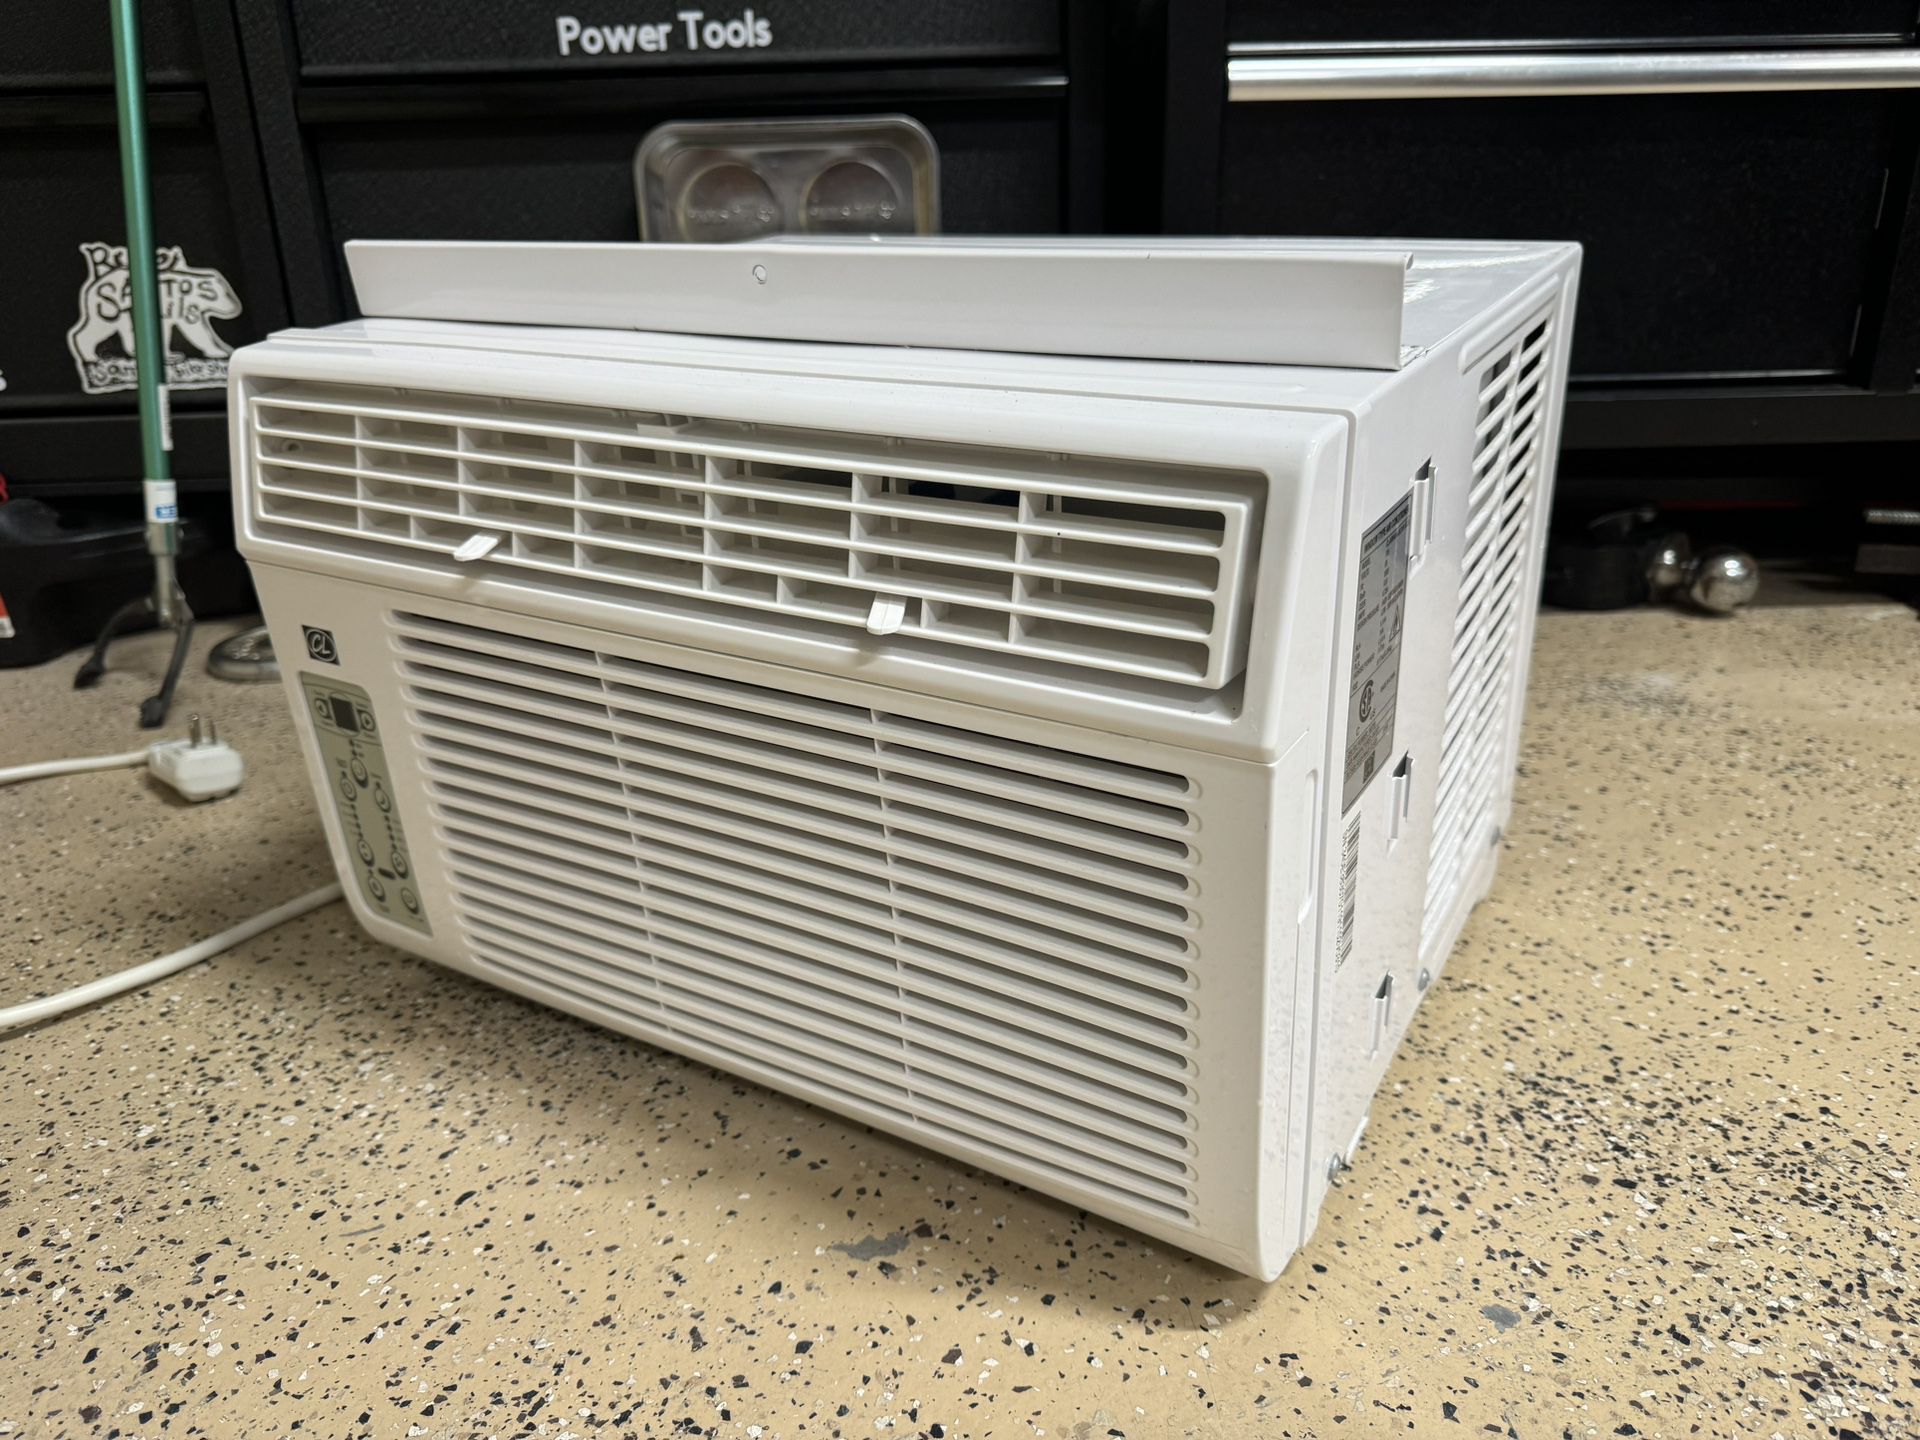 8k BTU Window AC Air Conditioner